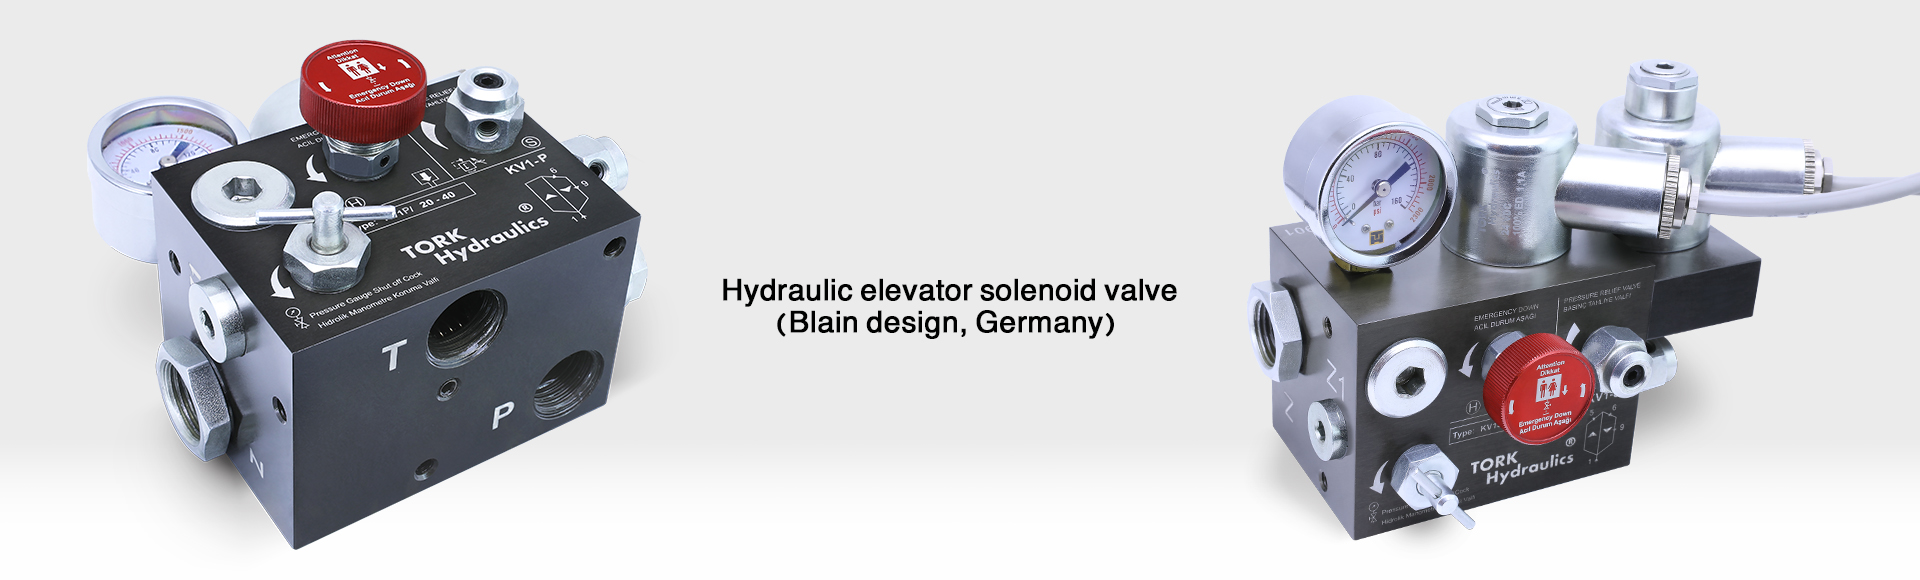 Blain hydraulic valve, Blaine electric valve